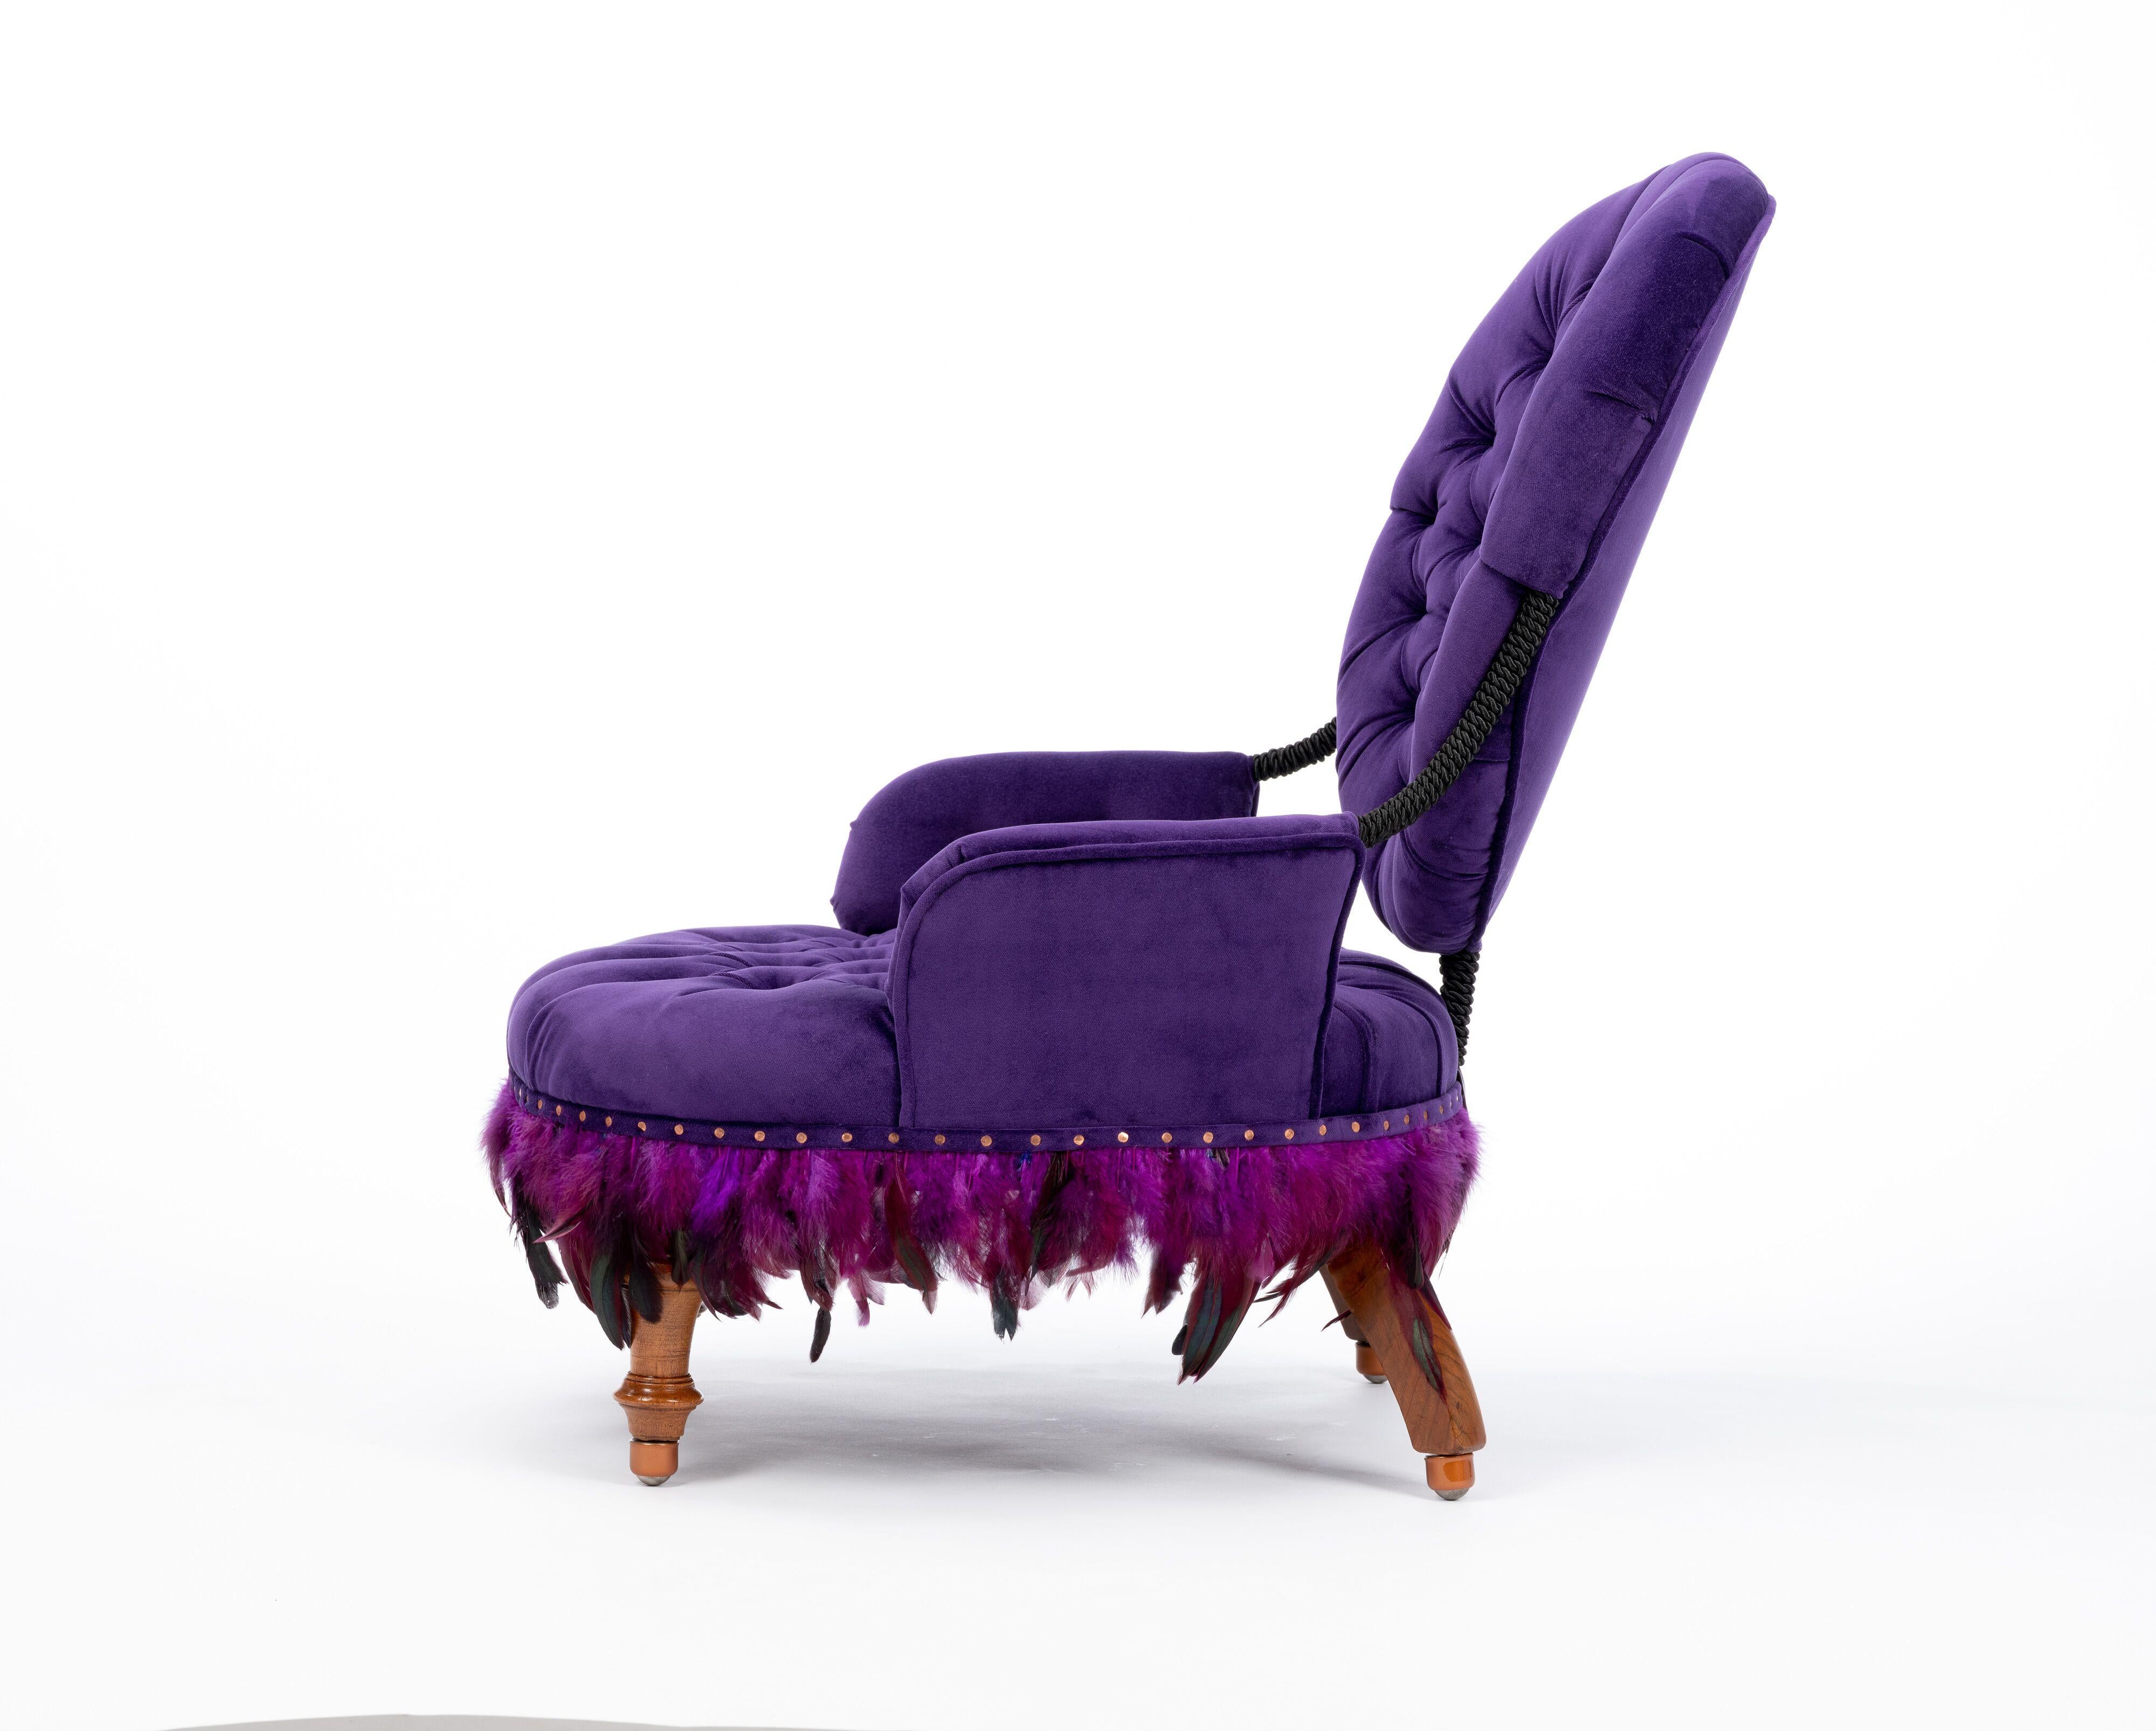 Wrought Iron Antique Salon Chair Purple Reign Burlesque Chair, France, circa 1875